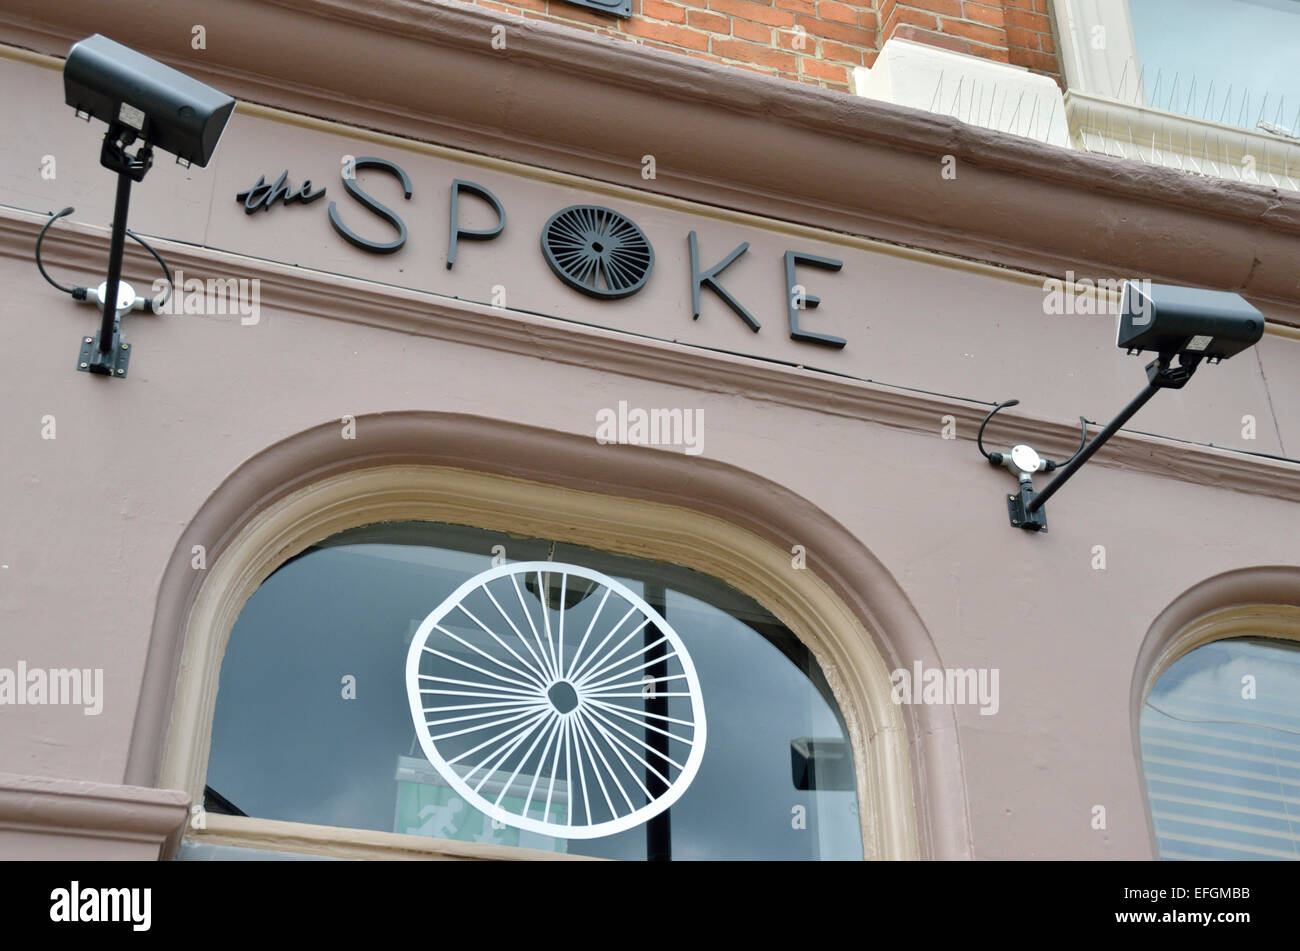 The Spoke coffee shop restaurant in Holloway Road, London, UK. Stock Photo